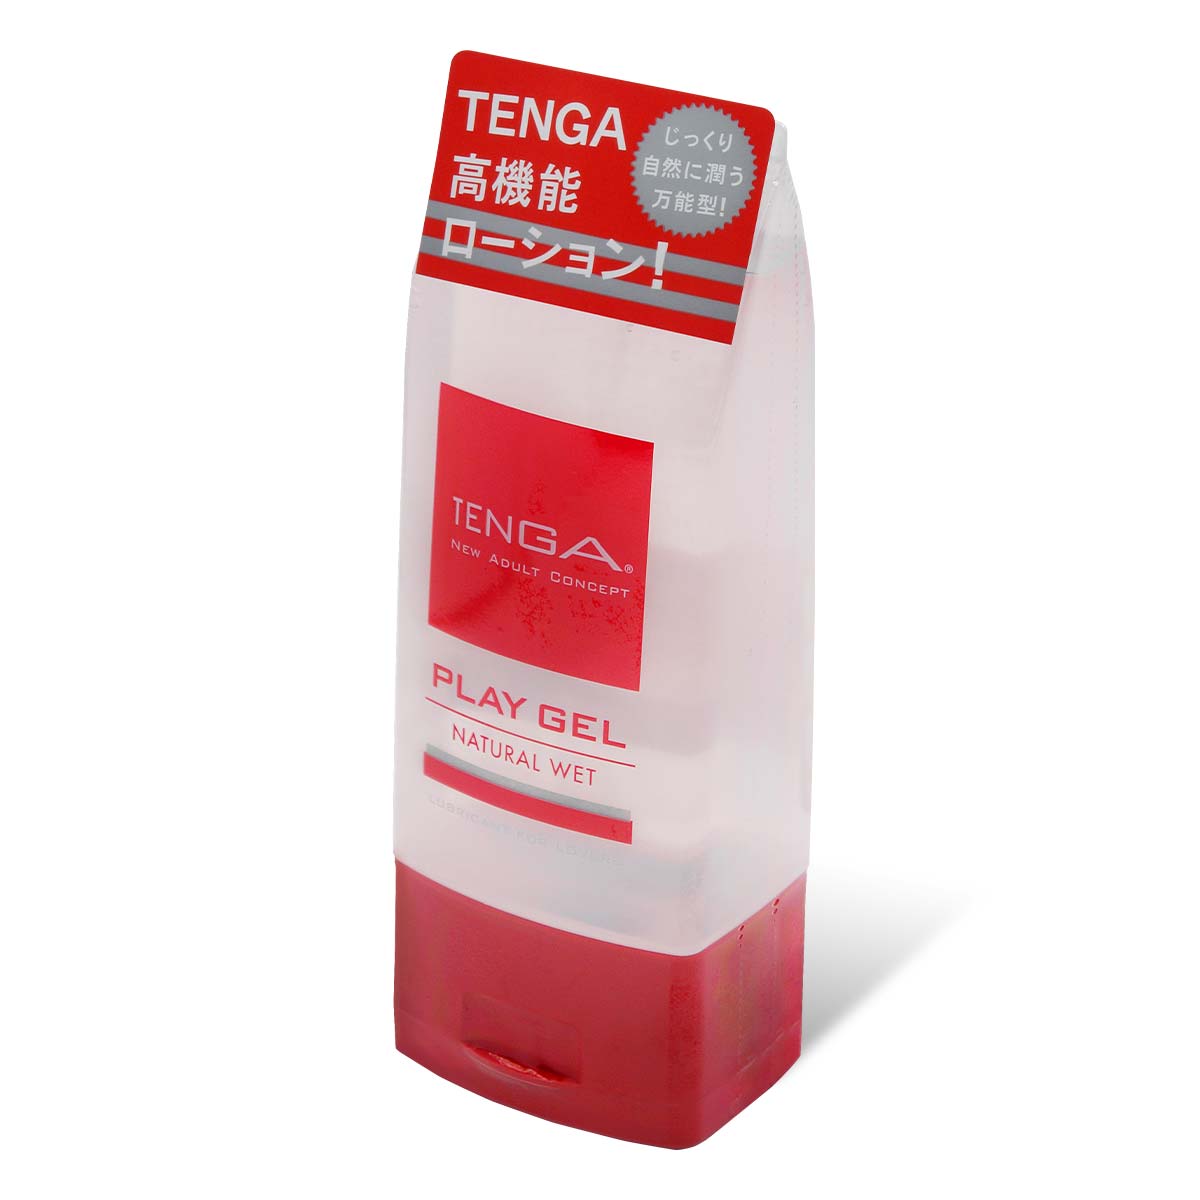 TENGA PLAY GEL NATURAL WET 160ml 水性潤滑劑